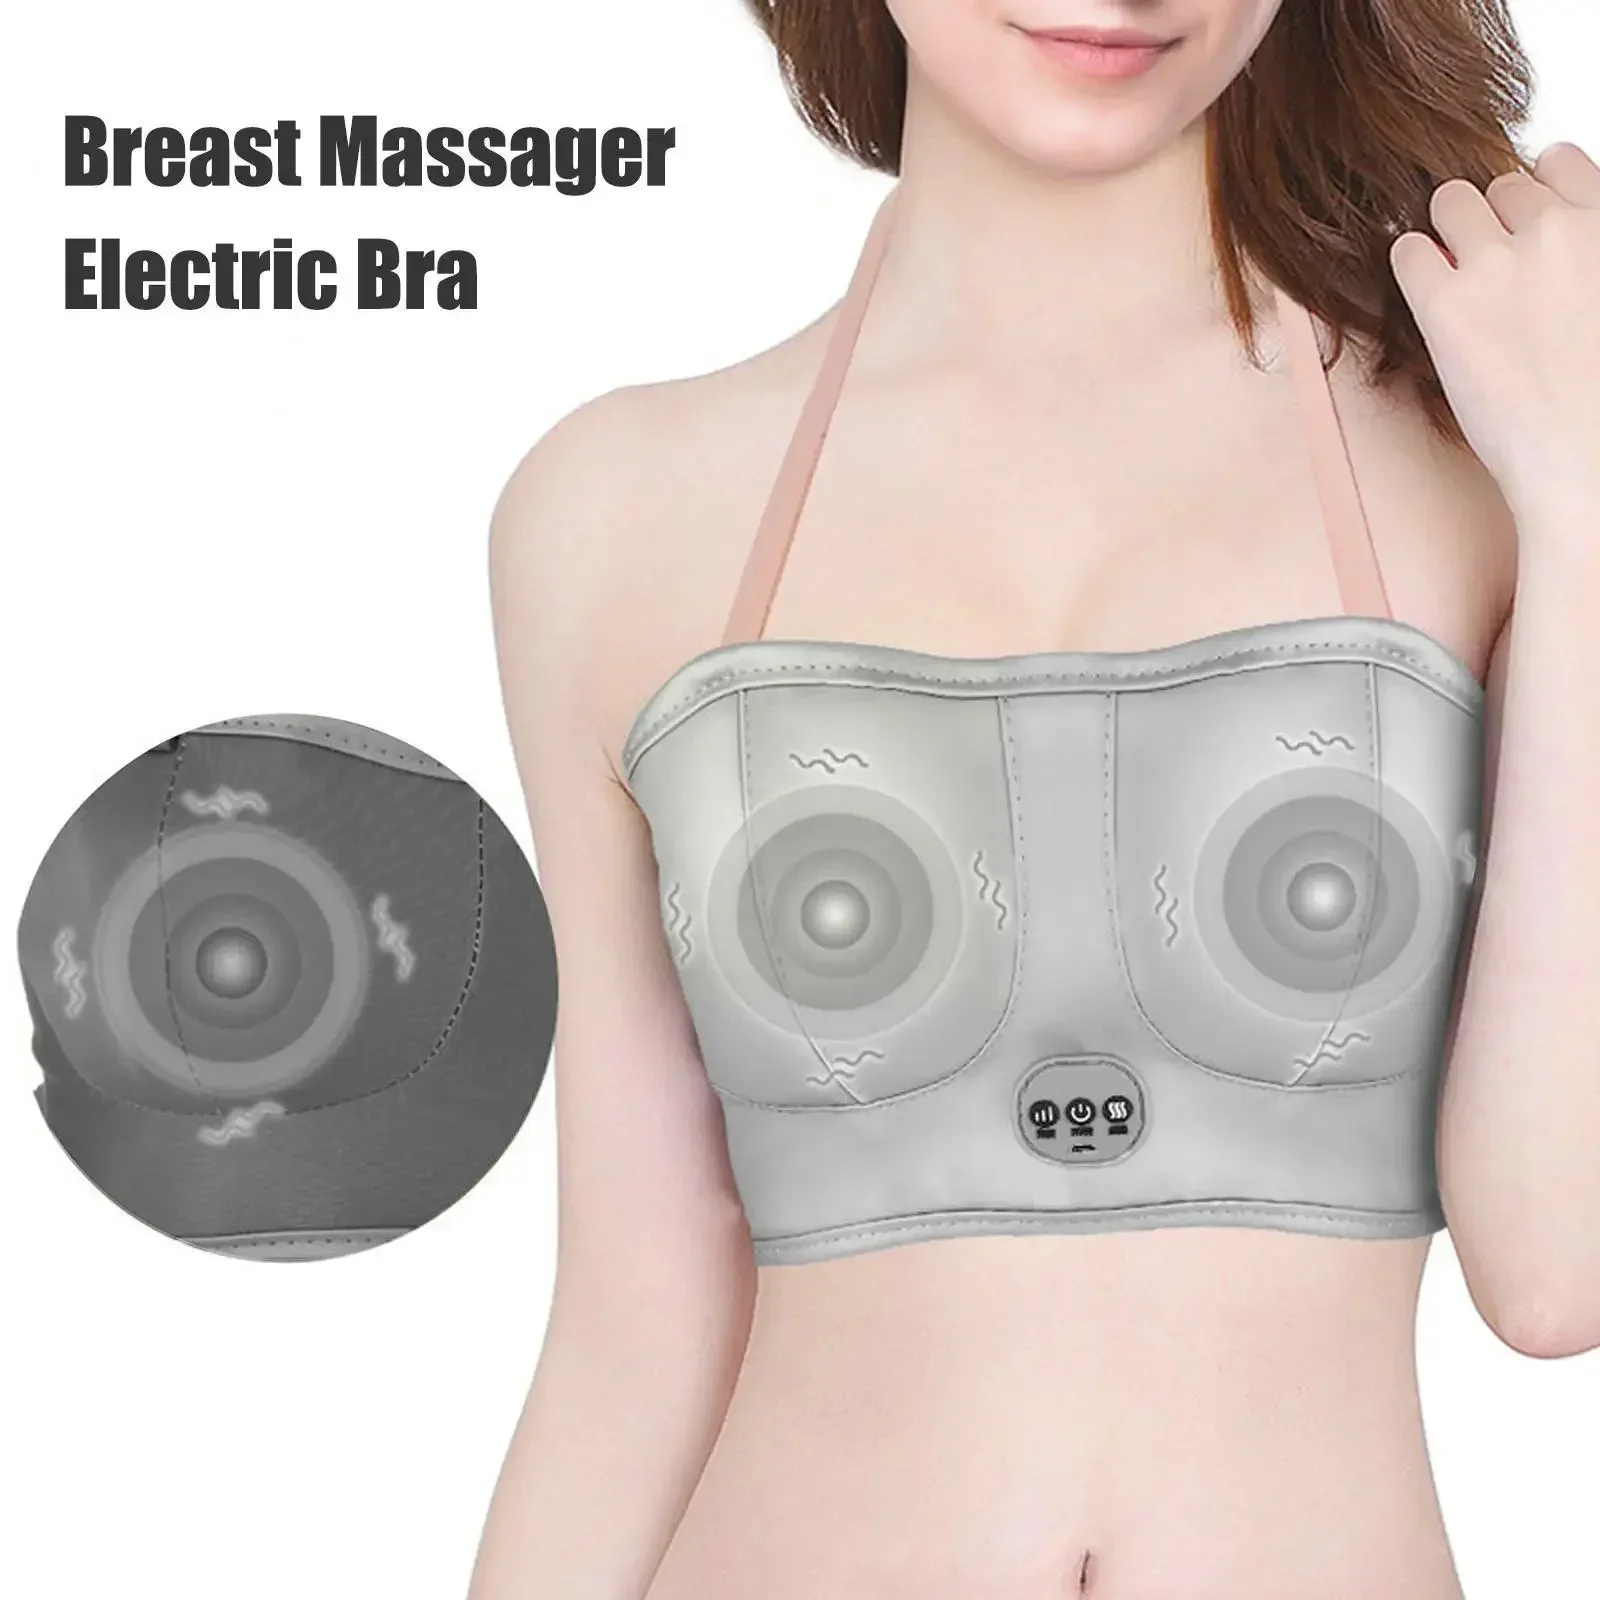 S51e4166432224f9fa1c2e6bf5e1b9f41A Electric Breast Massage Bra Electronic Vibration Chest Massager Breast Enhancement Instrument Breast Heating Stimulator Machine